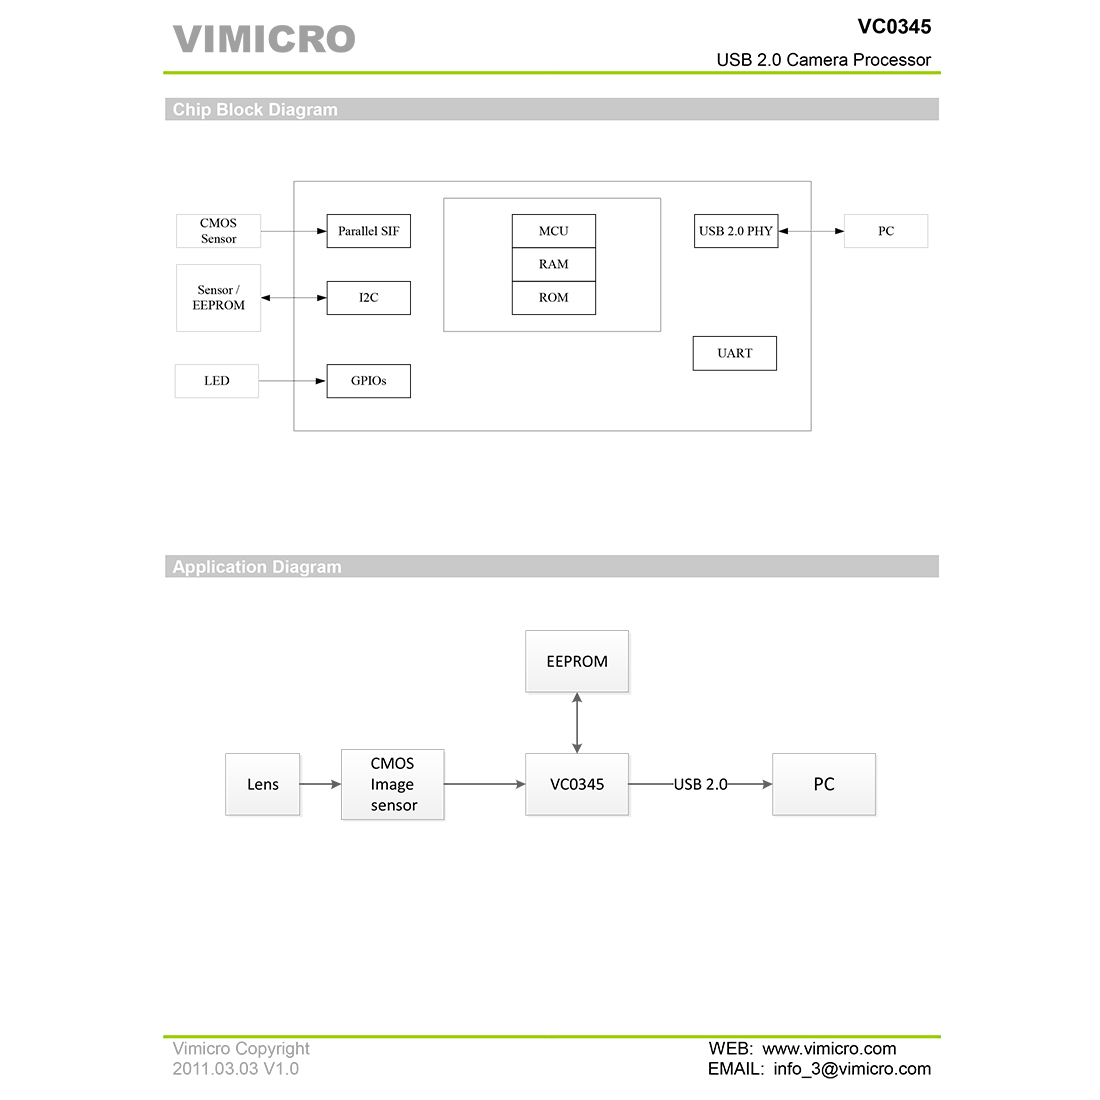 VIMICRO廉价笔记本摄像头主控，VIMICRO低端笔记本摄像头主控，中星微代理商，中星微方案商，中星微主控代理商，中星微电子摄像头主控经销商，中星微官网，VC0345价格，VC0345 datasheet，VC0345文档下载，VC0345原装现货，VC0345现货库存，VC0345芯片，VC0345图片，VC0345规格书，VC0345代理商，VC0345技术支持，VC0345产品介绍，VC0345参数，VC0345方案商，VC0345分销商，VC0345经销商，VC0345官网，VC0345生产厂家，VC0345专卖店，VC0345高价收购，VC0345模组，VC0345模块，VC0345特价，VC0345库存，VC0345生产商，VC0345哪里买，VC0345性价比，VC0345PLNA规格书，VC0345PLVAI现货库存，VC0345PLVAI简介